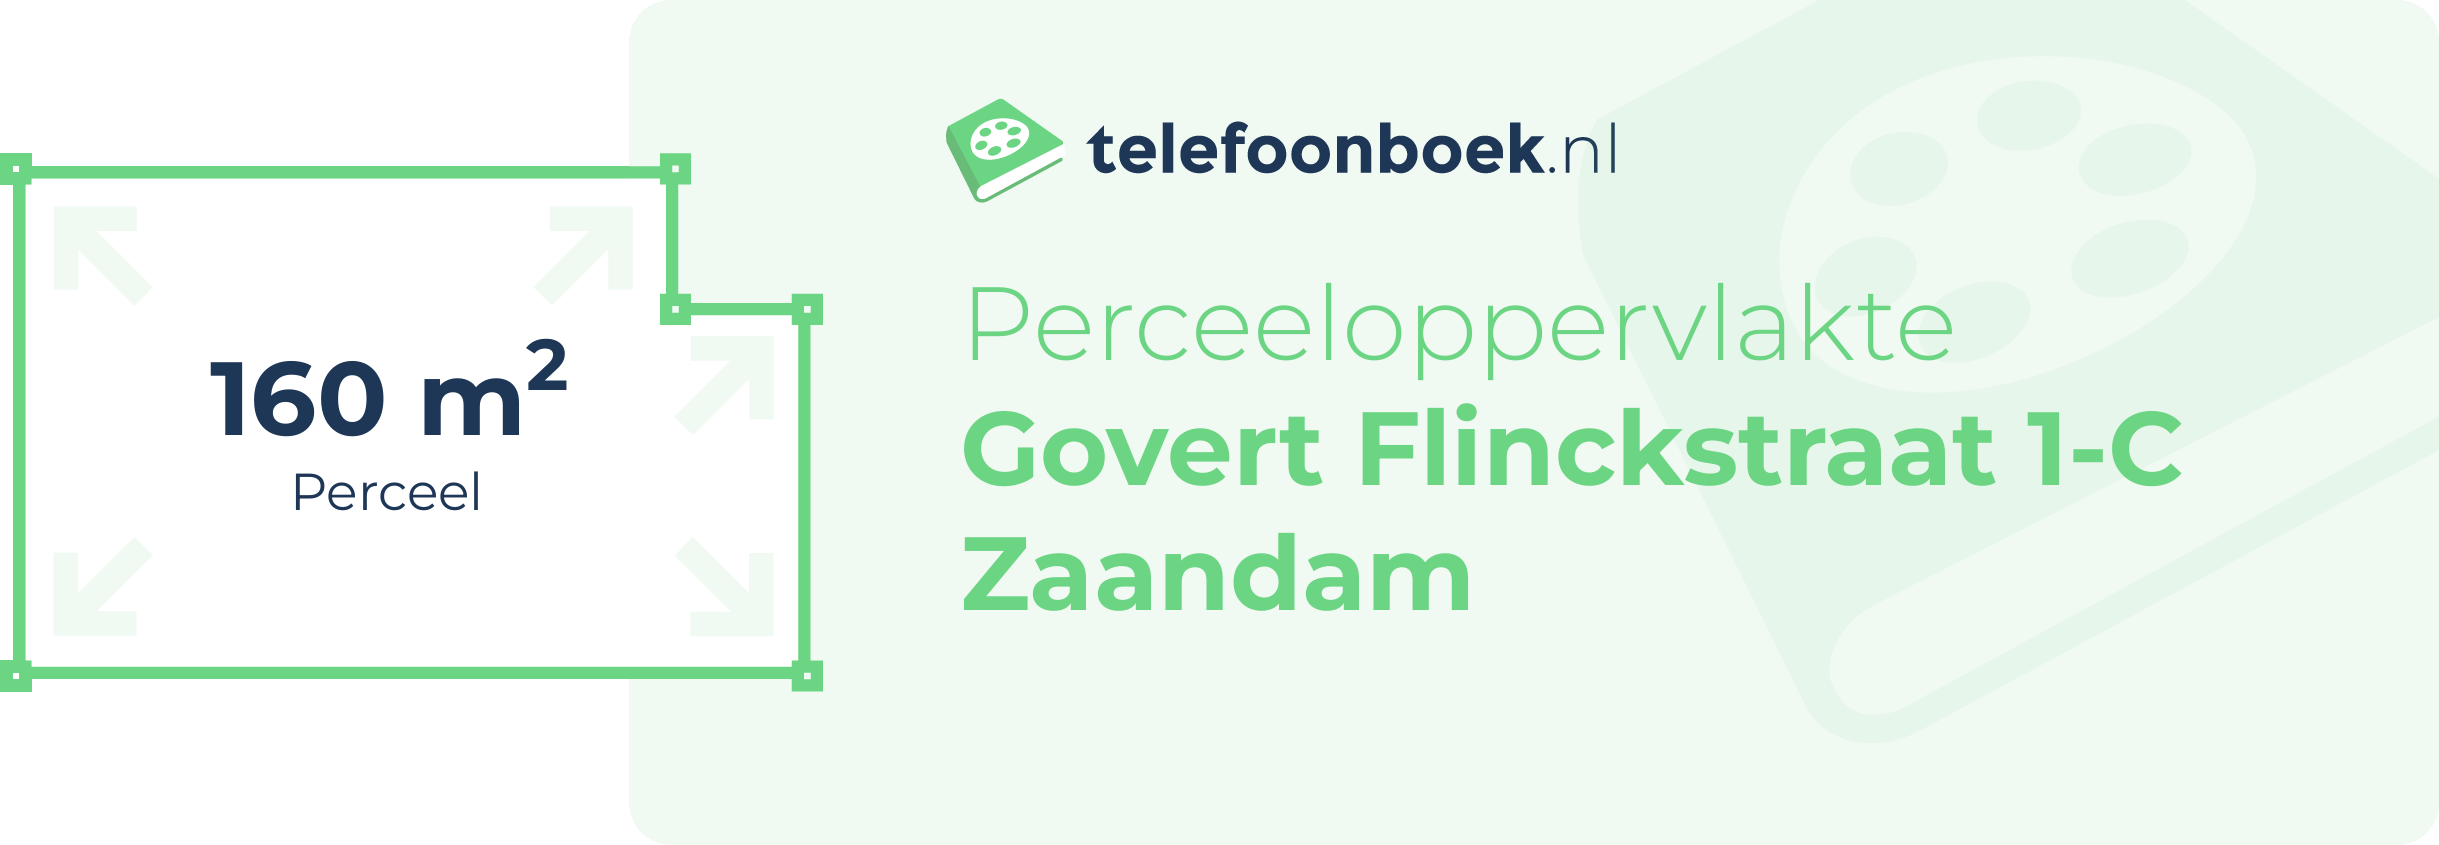 Perceeloppervlakte Govert Flinckstraat 1-C Zaandam